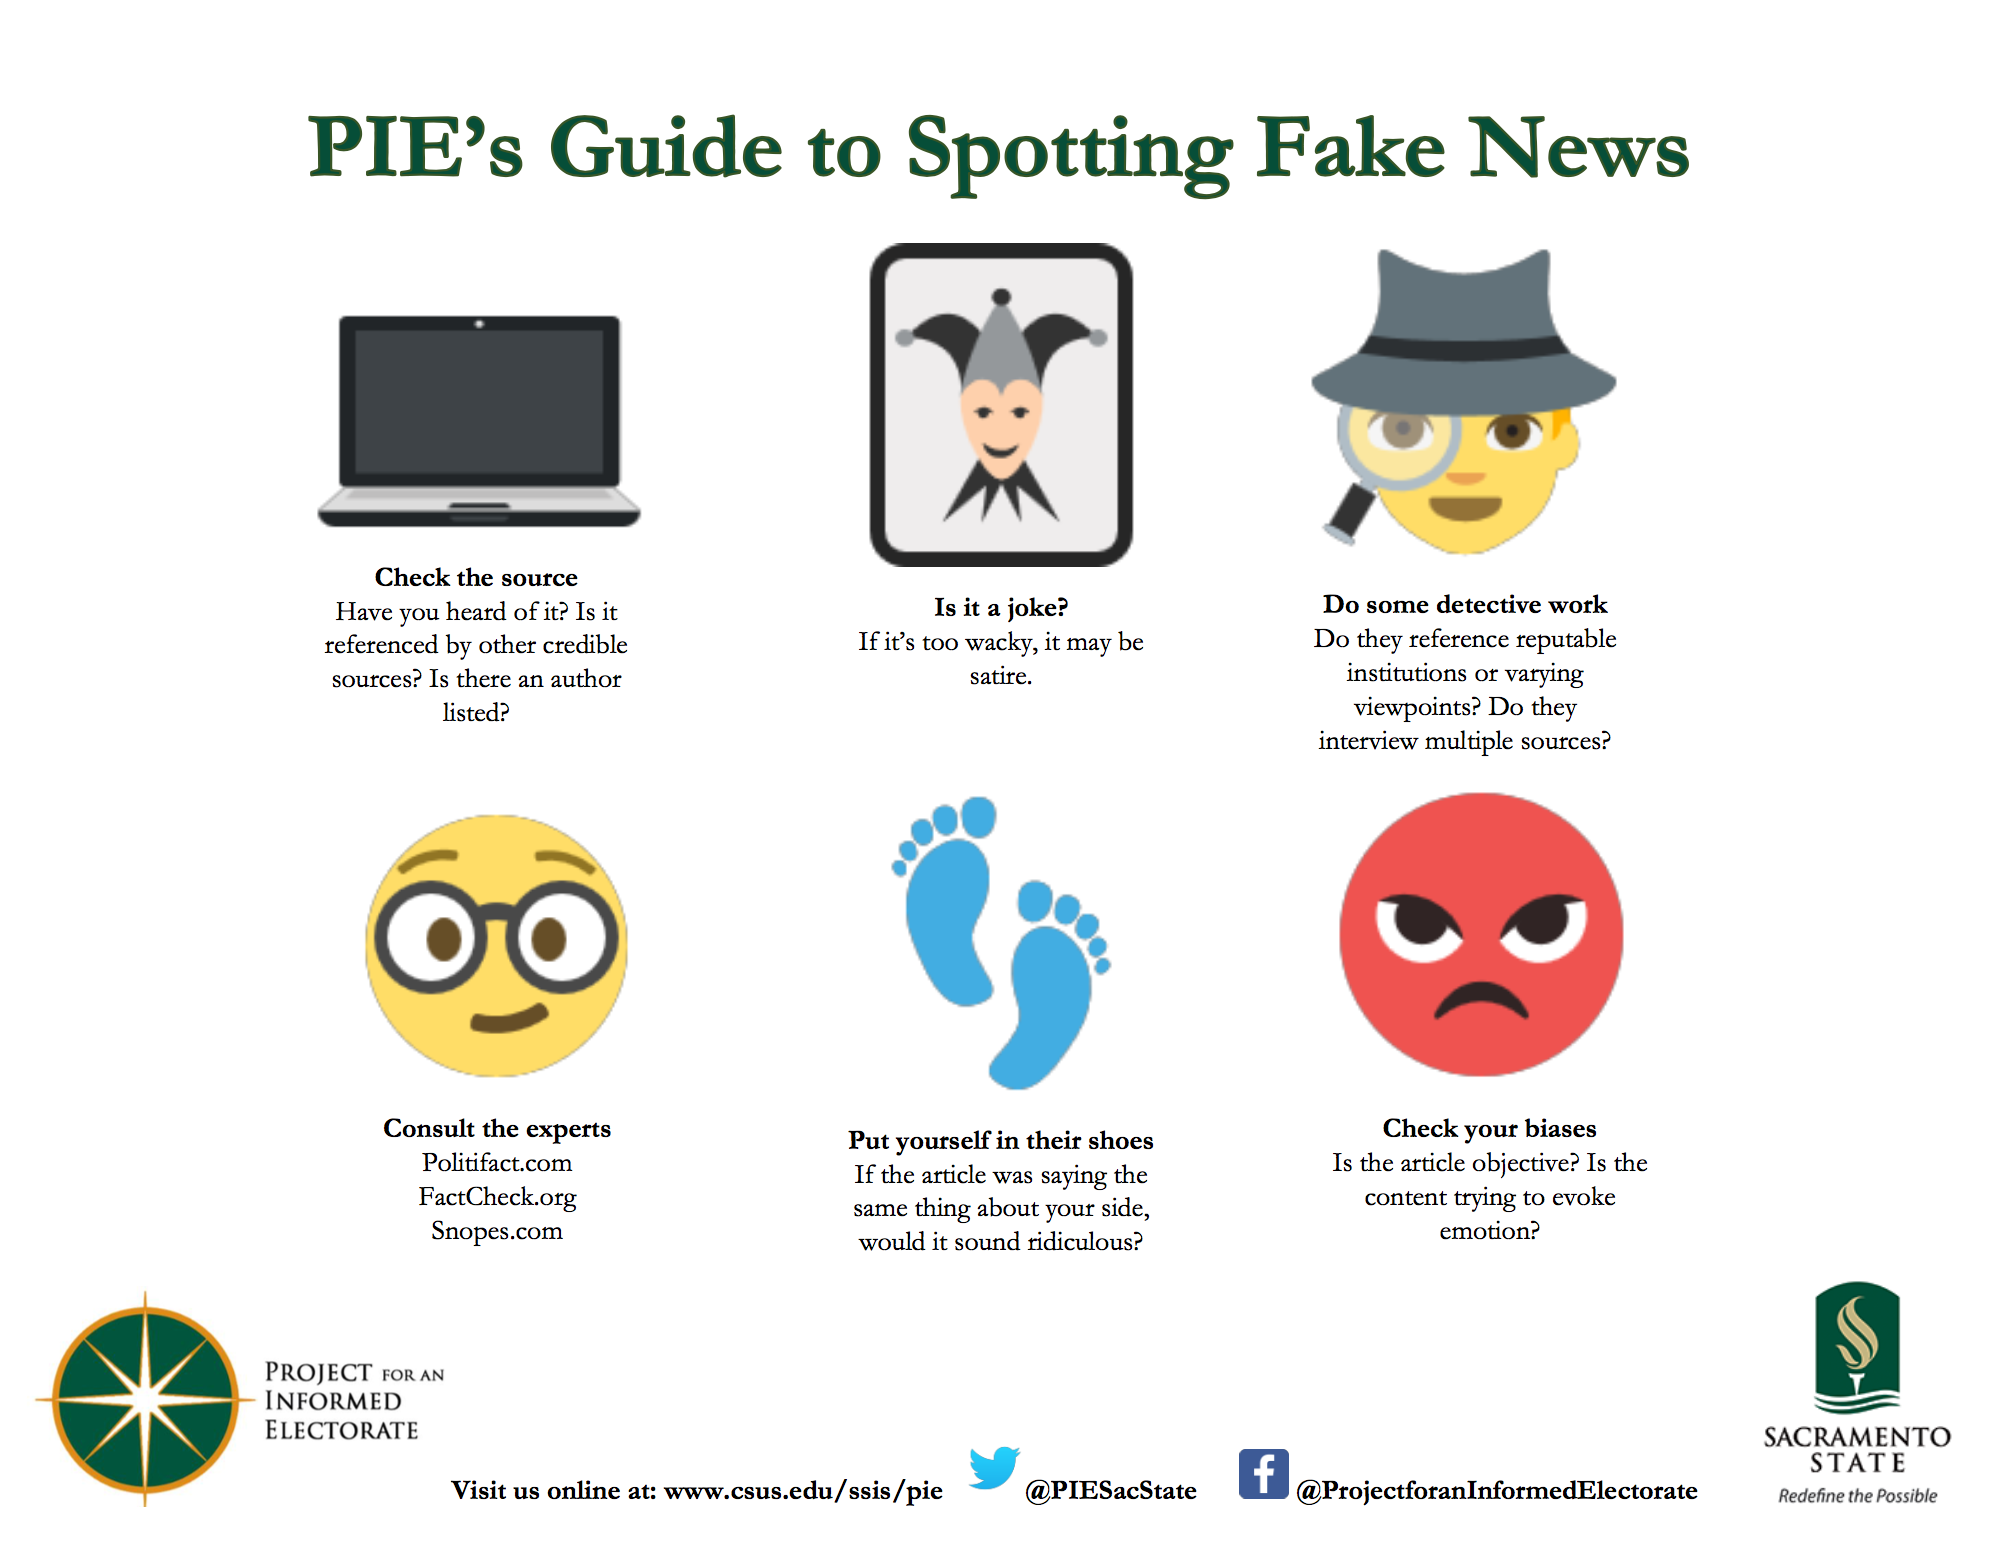 PIE Fake News flier guide